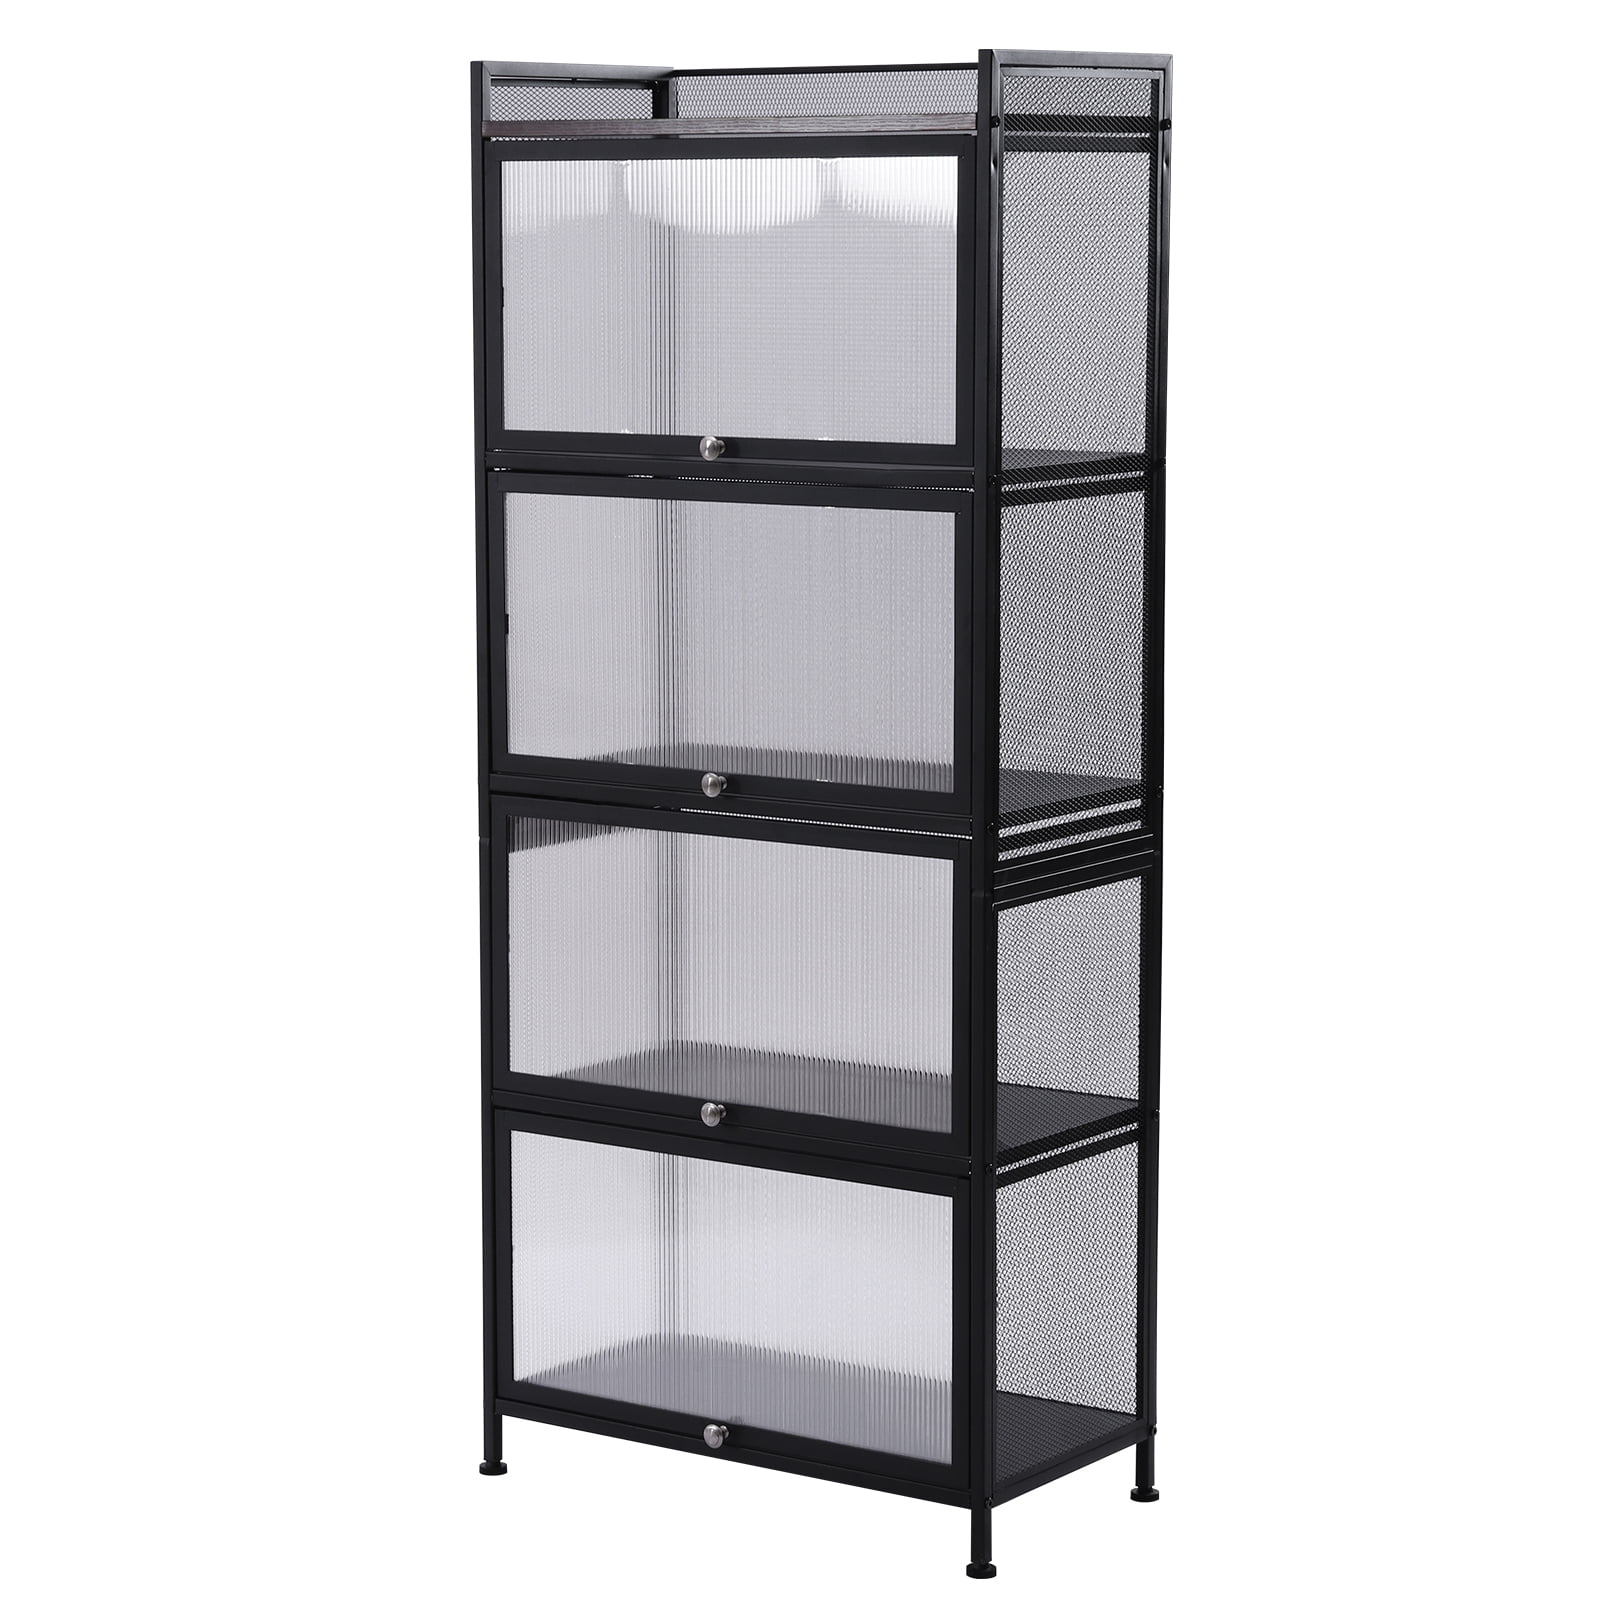 KANGTEEN Metal Kitchen Cabinet Orgarnizer, 5 Layers Freestanding Kitchen Storage Shelves Backer's Rack with Clamshell Glass Doors Black/White 23.6*12.6*